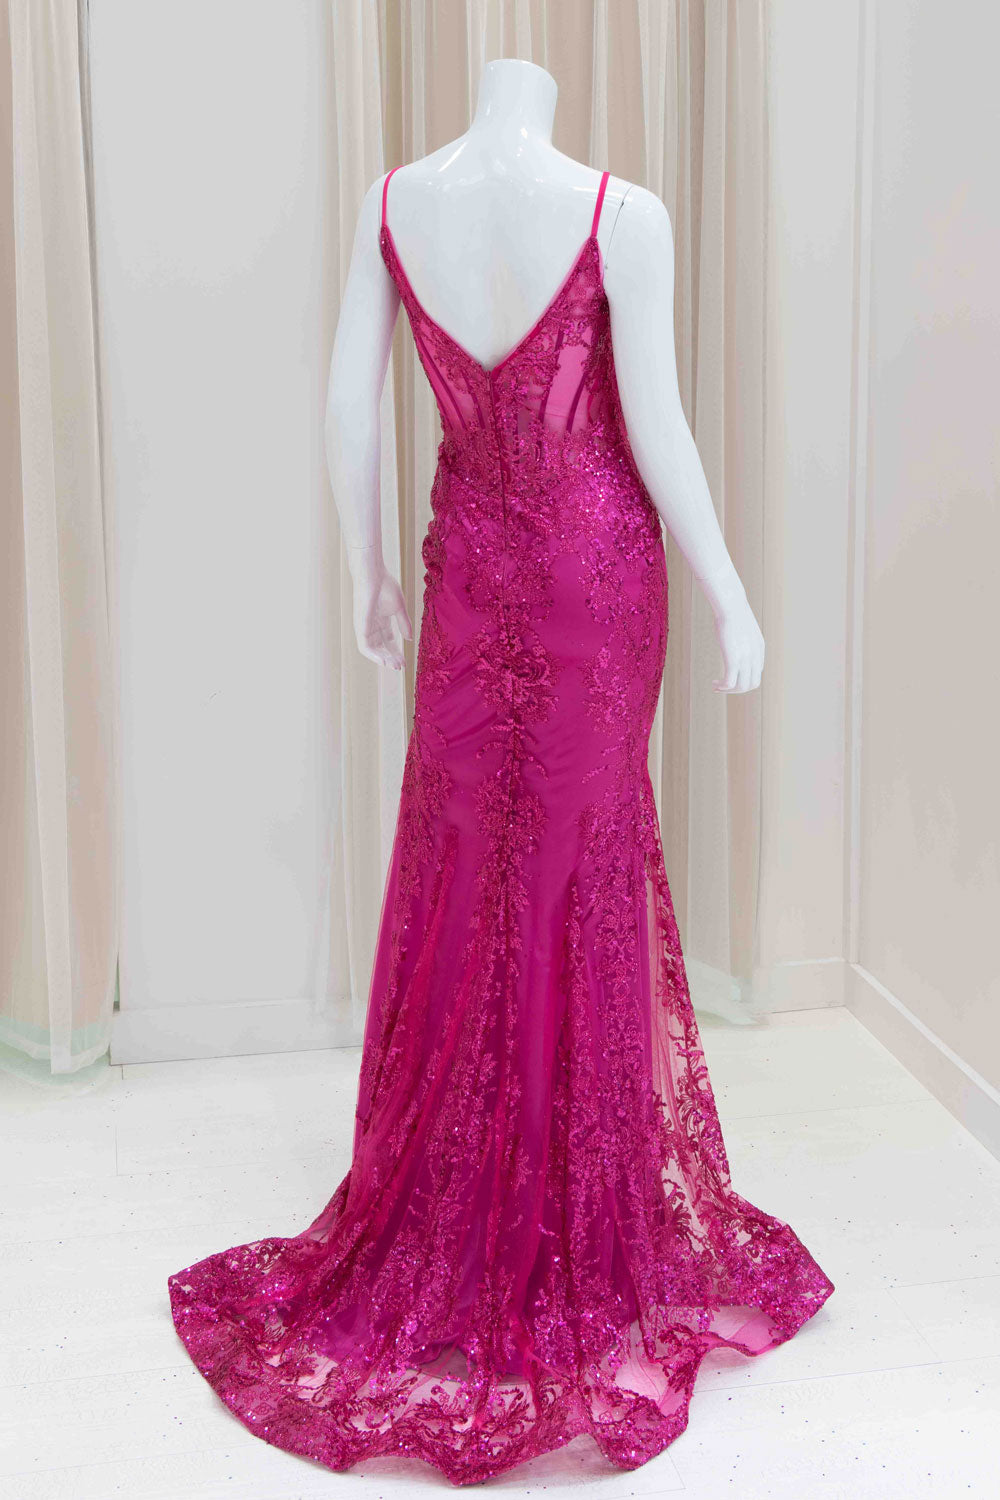 Darleena Glitter Evening Gown in Hot Pink